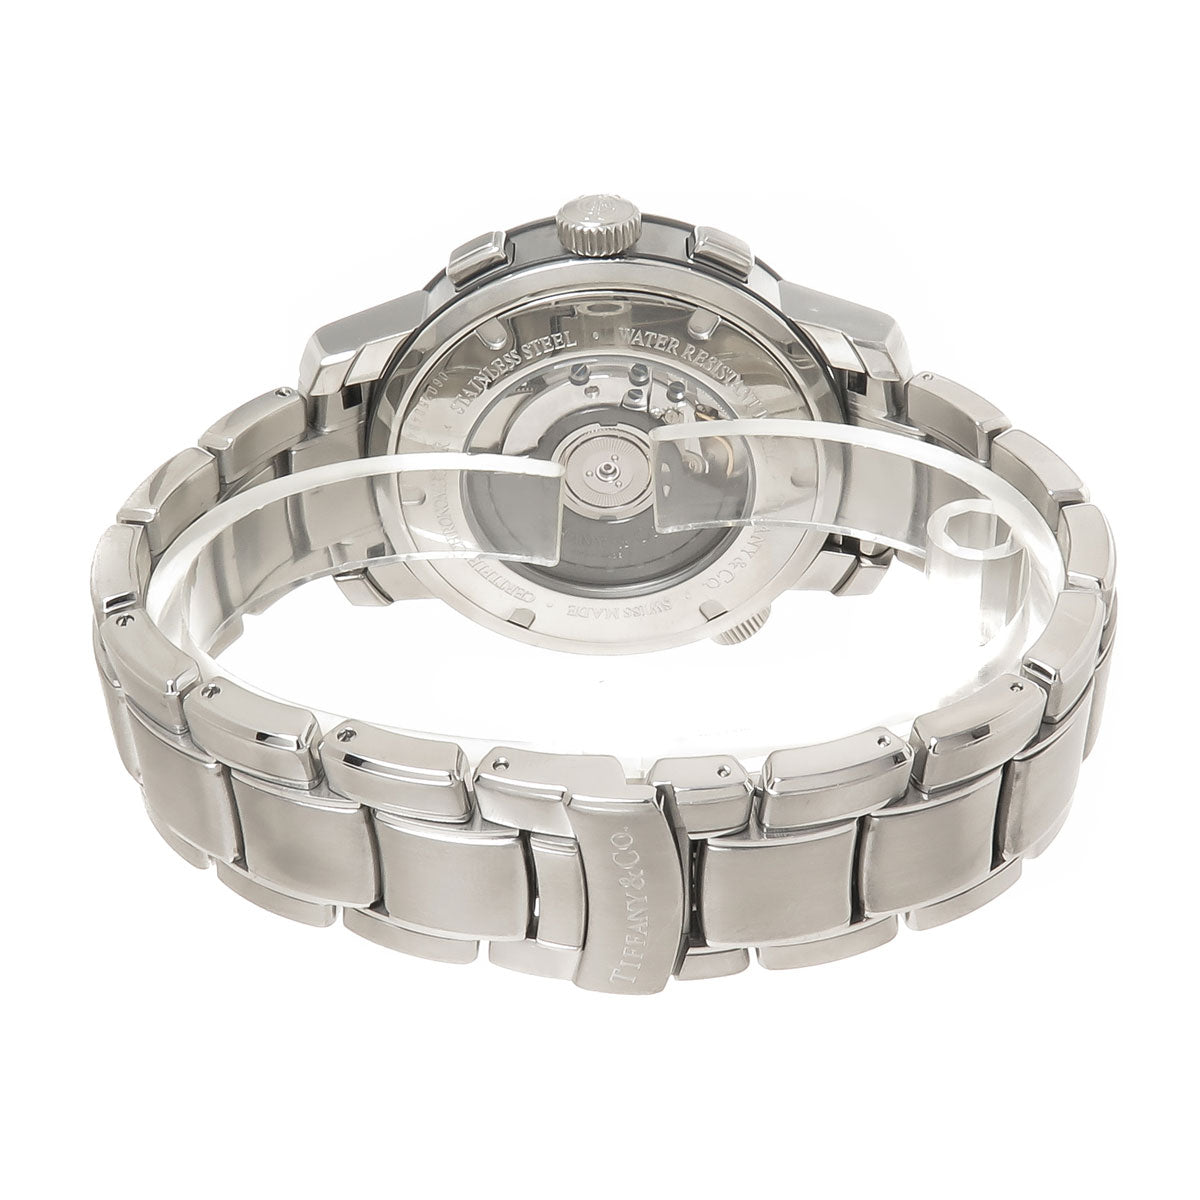 Tiffany & Co. Lady's 14K Solid Gold Quartz Watch